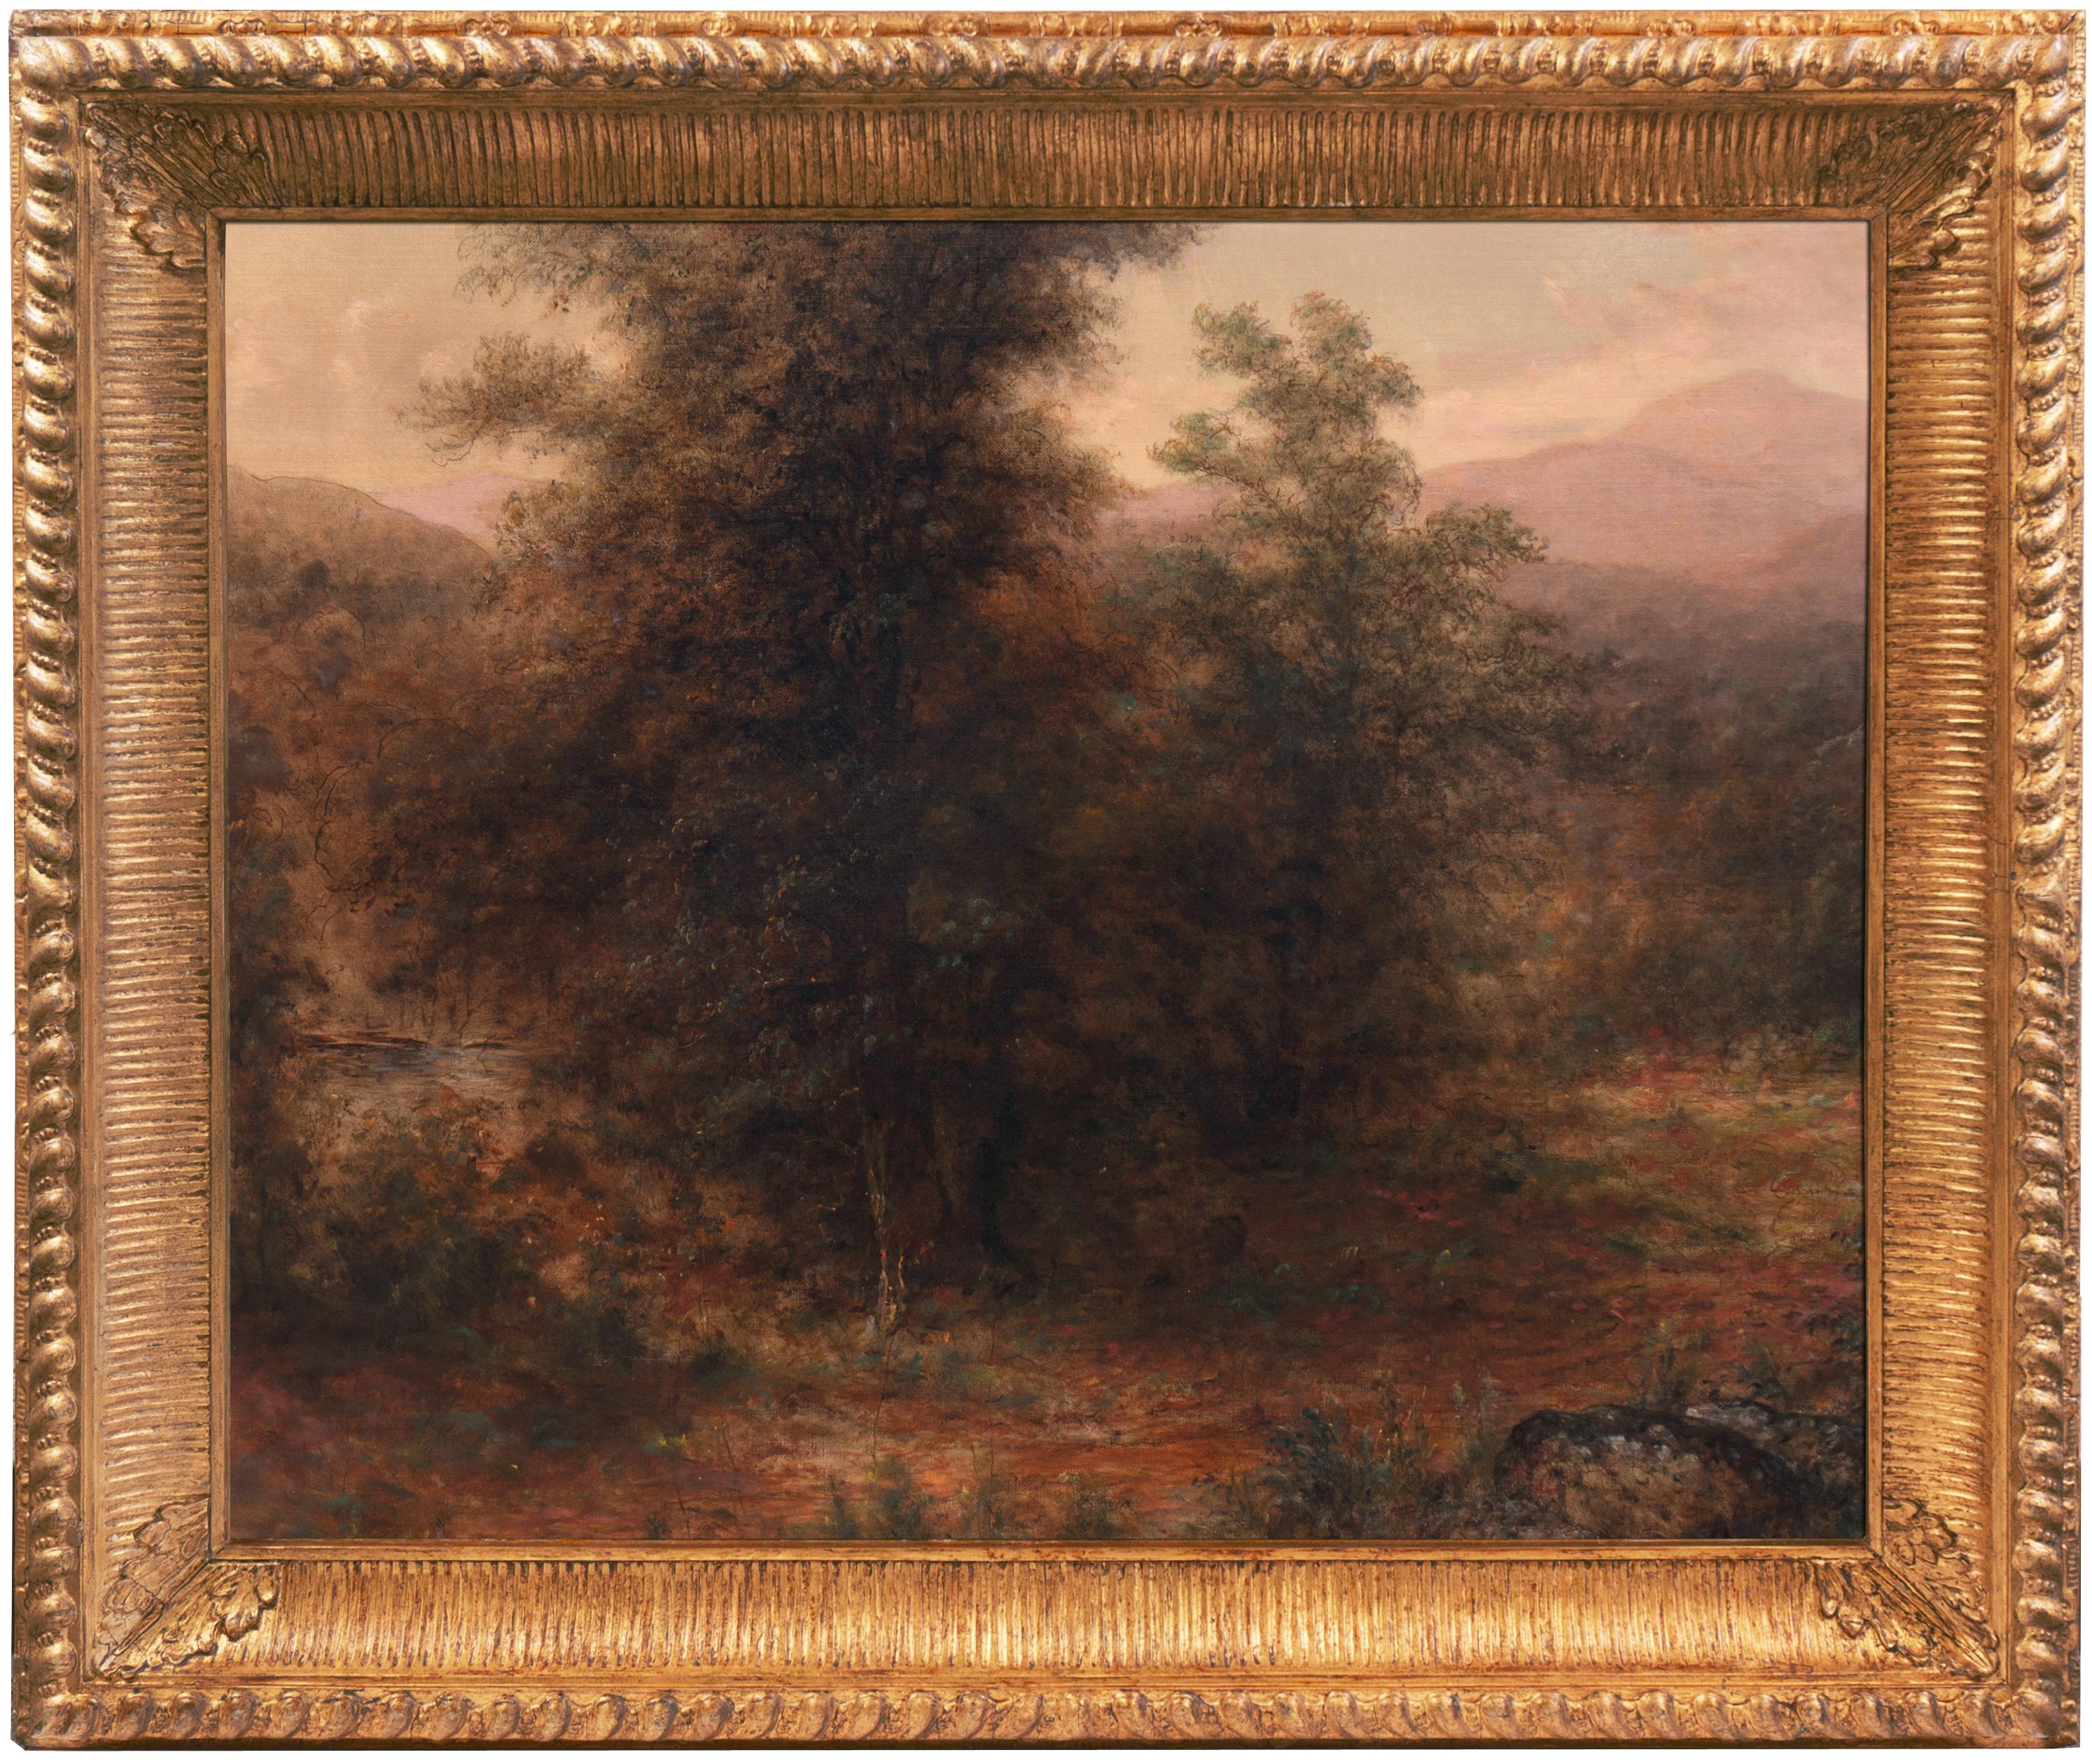 19th Century American School Landscape Painting - 'Sunlit Woodland Landscape', Large Hudson River Valley Oil, Luminism, New York 